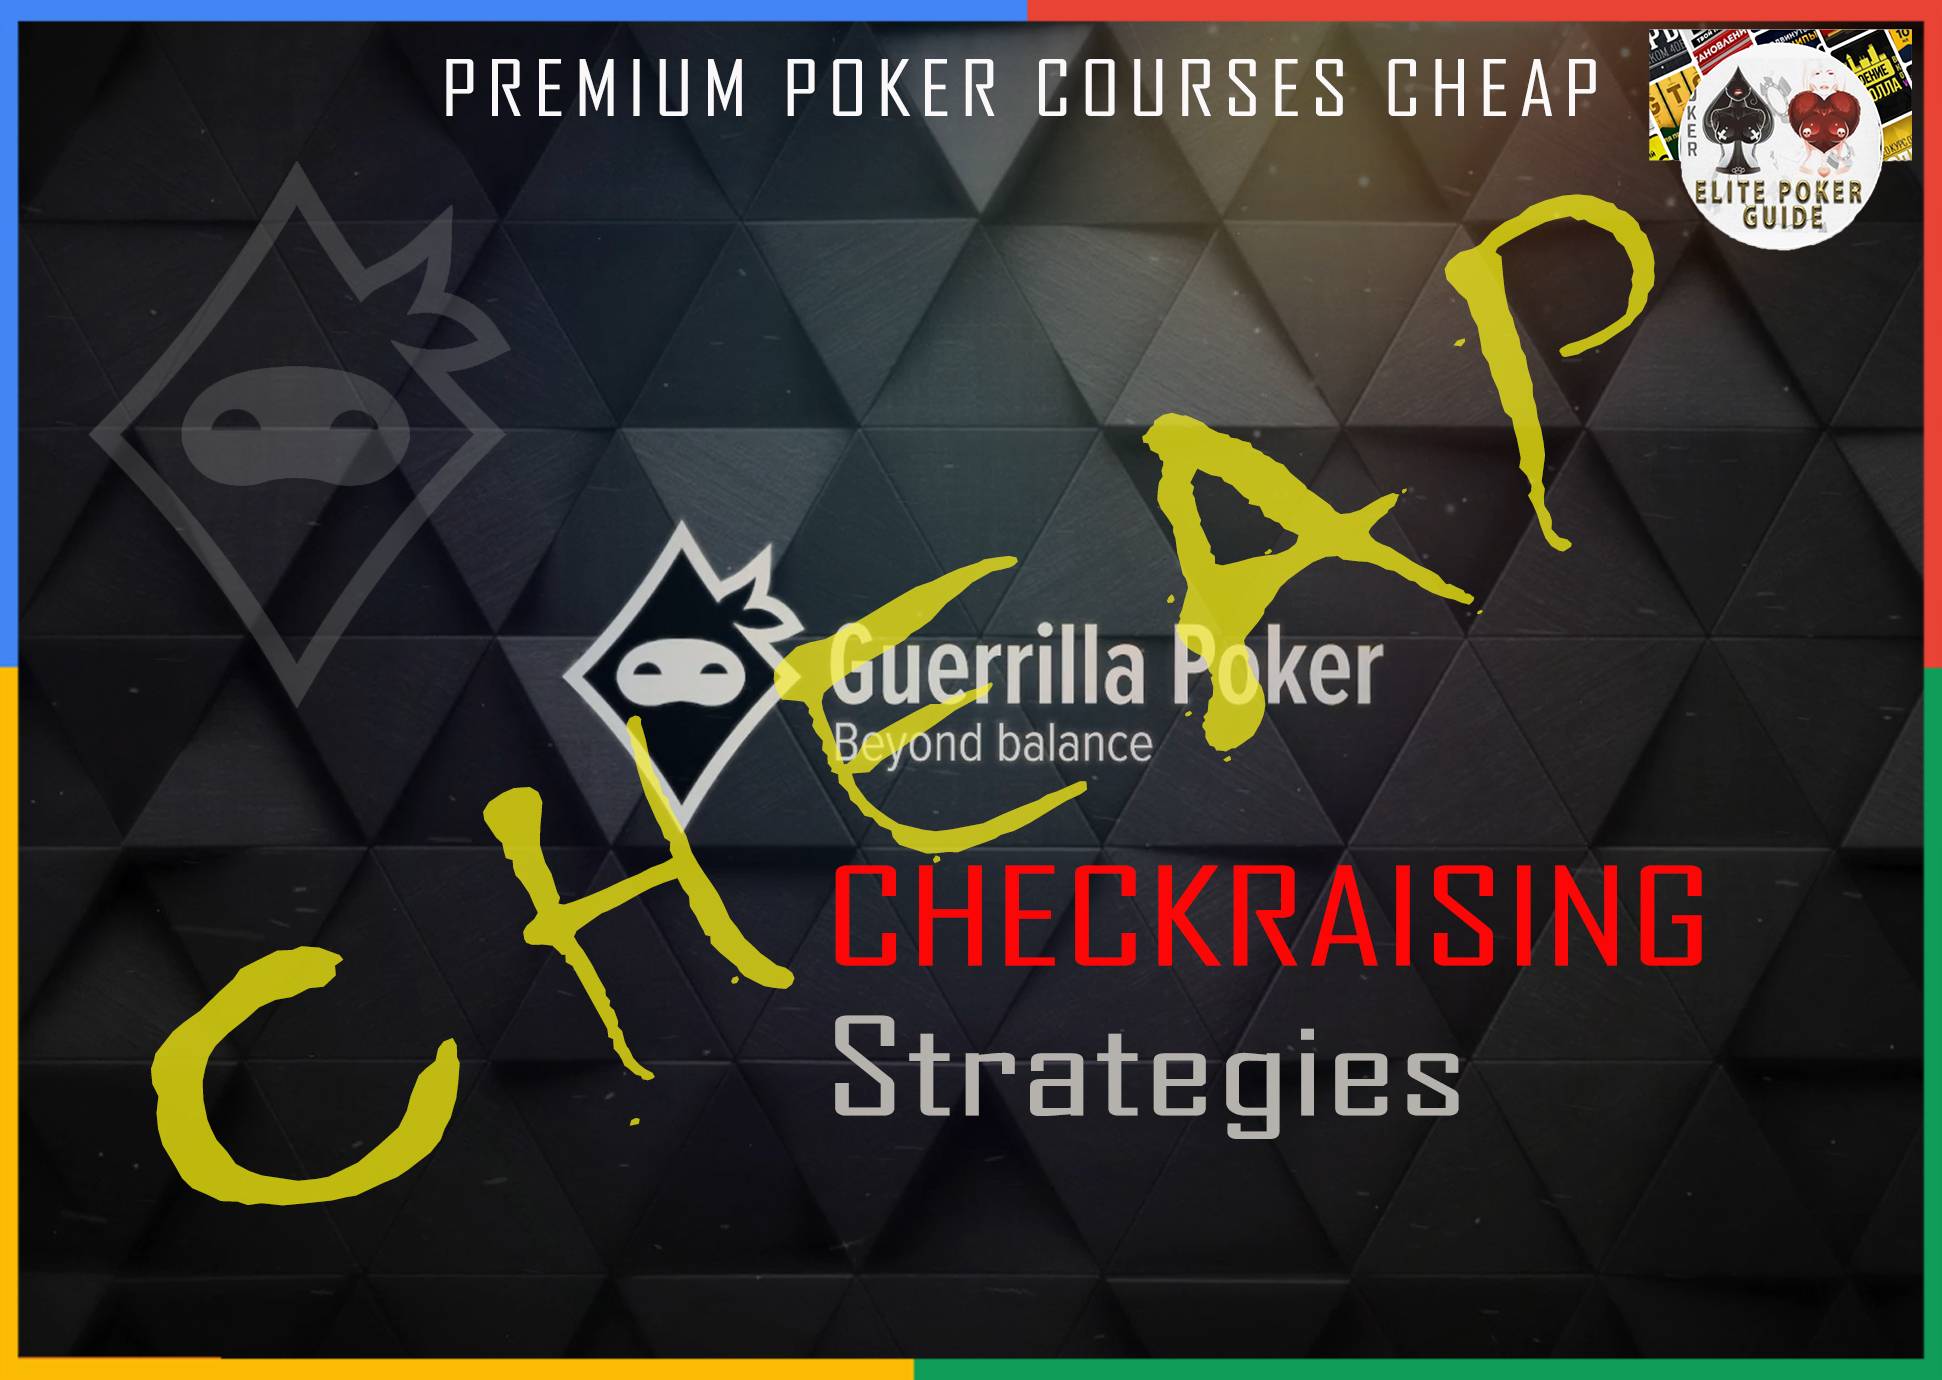 Guerrilla Poker - CHECKRAISING STRATEGIES